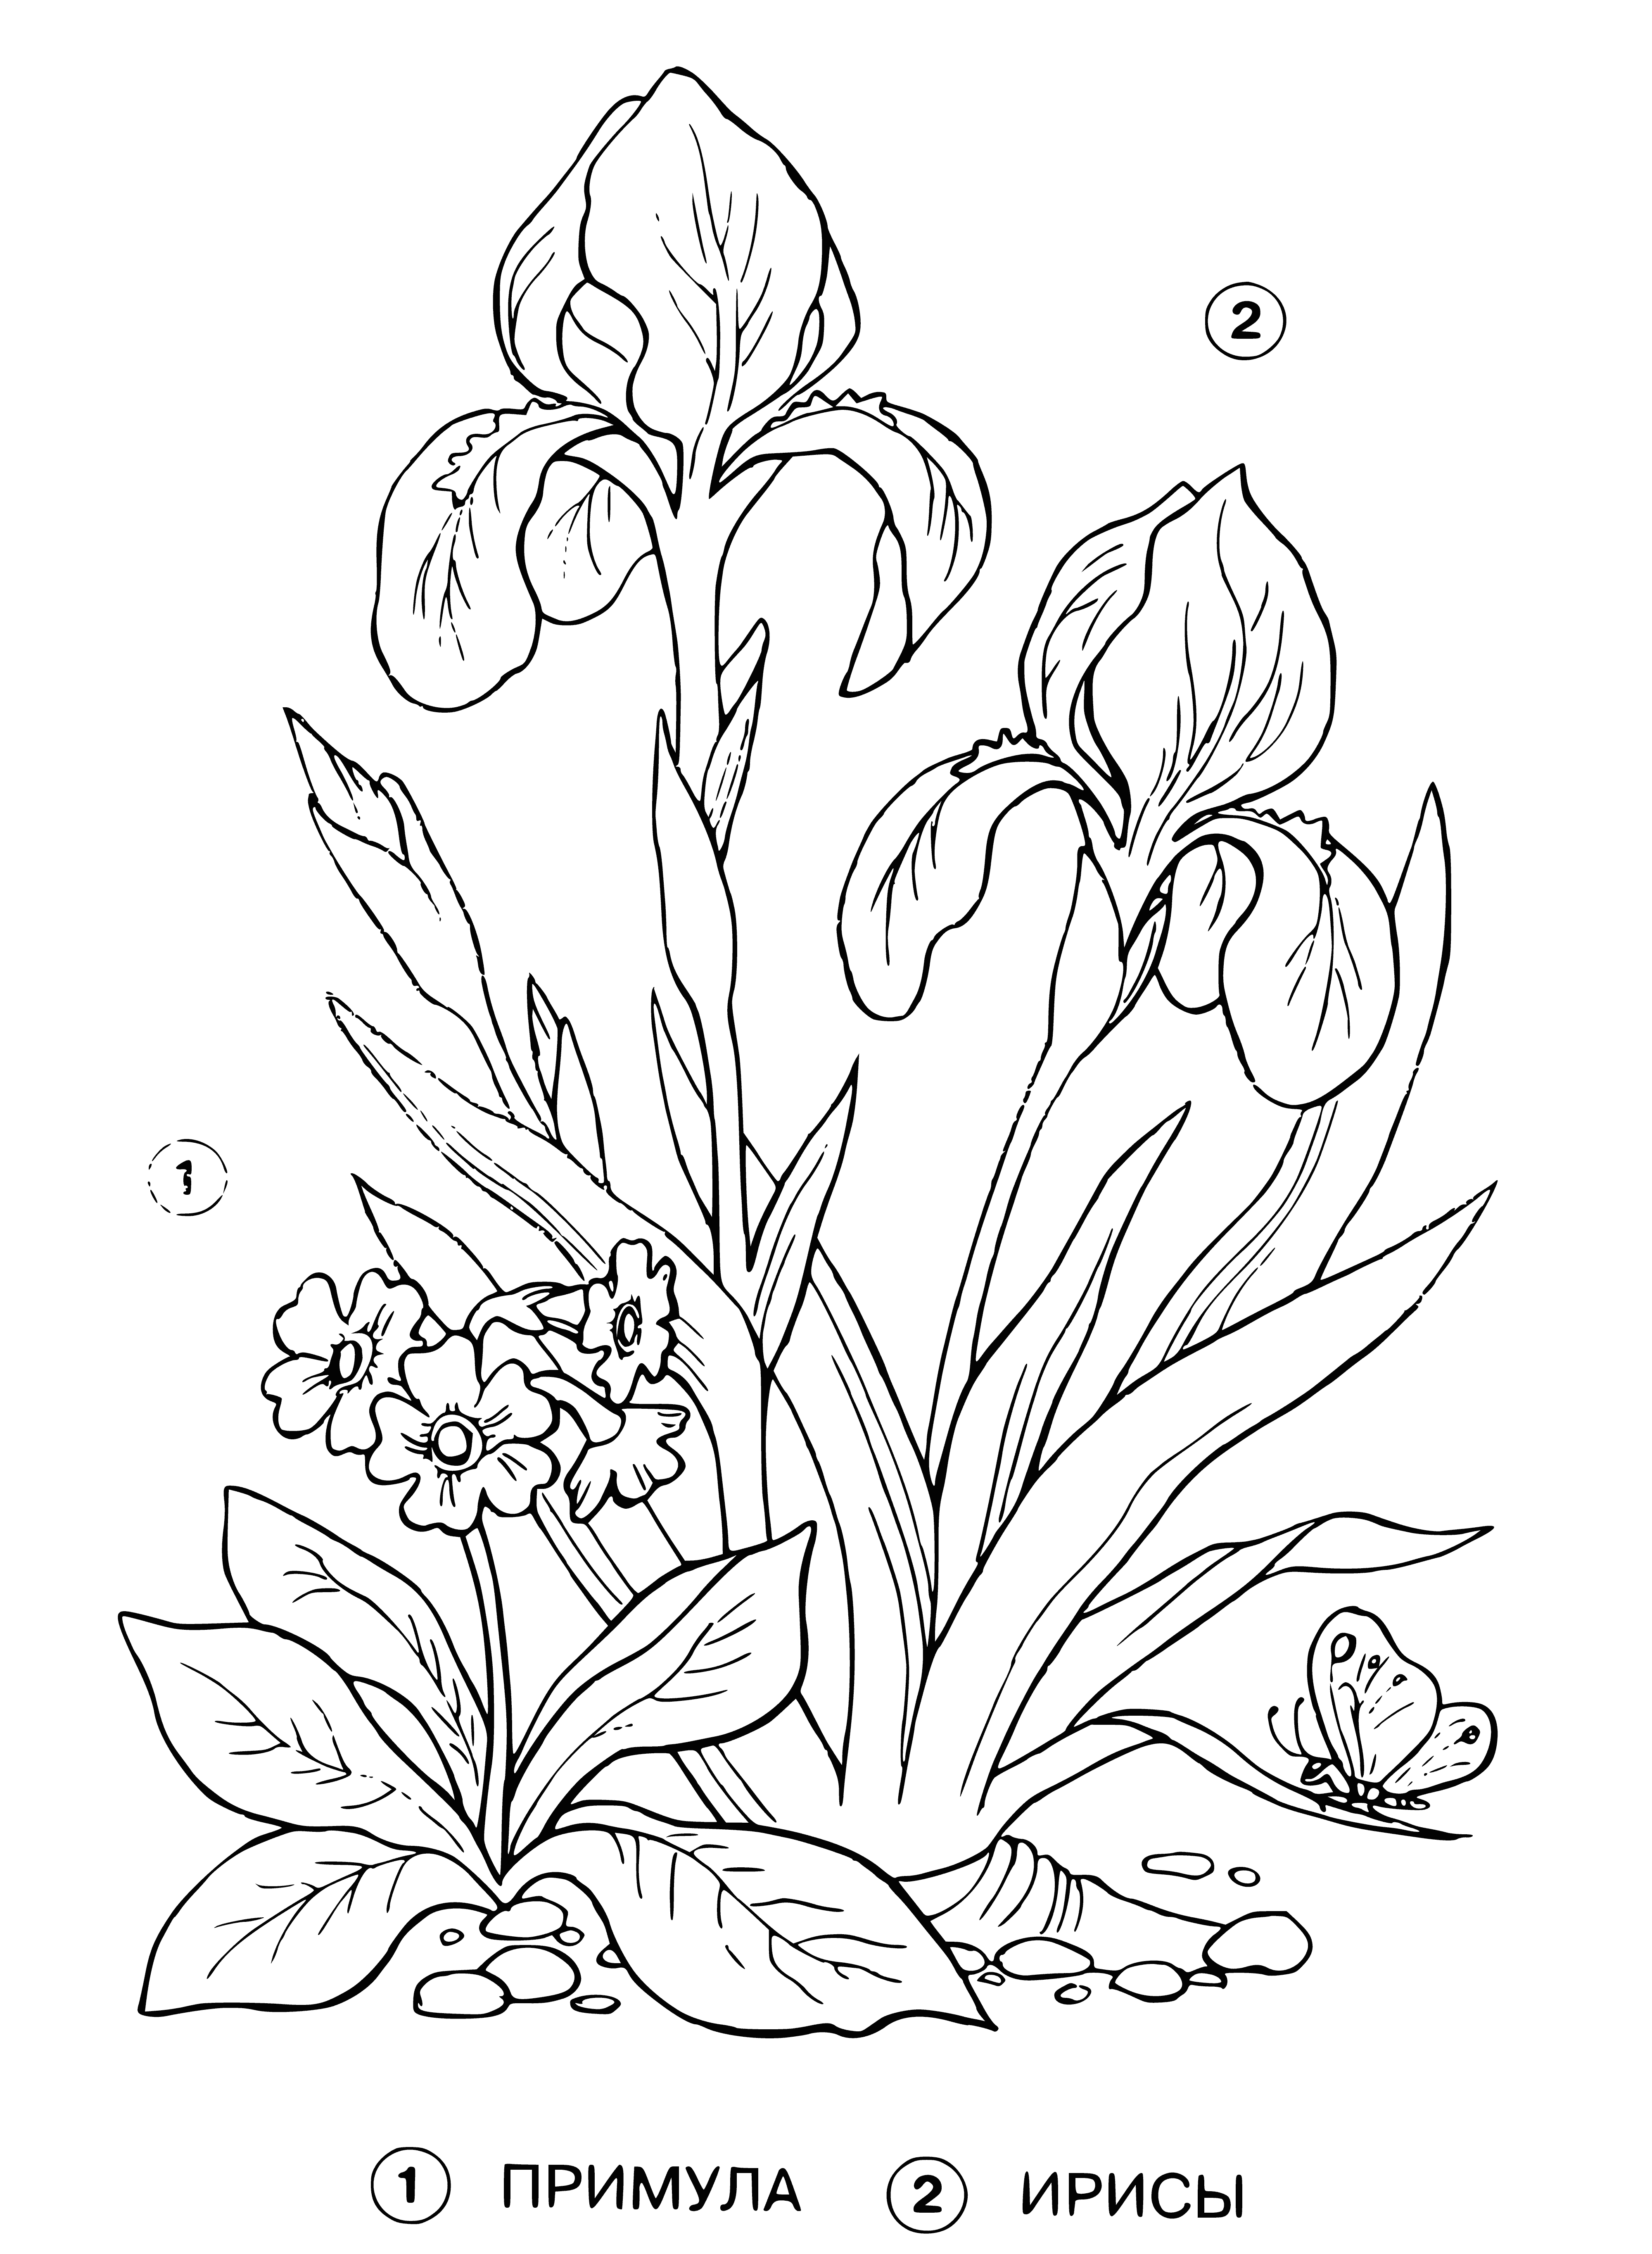 Primrose and irises coloring page